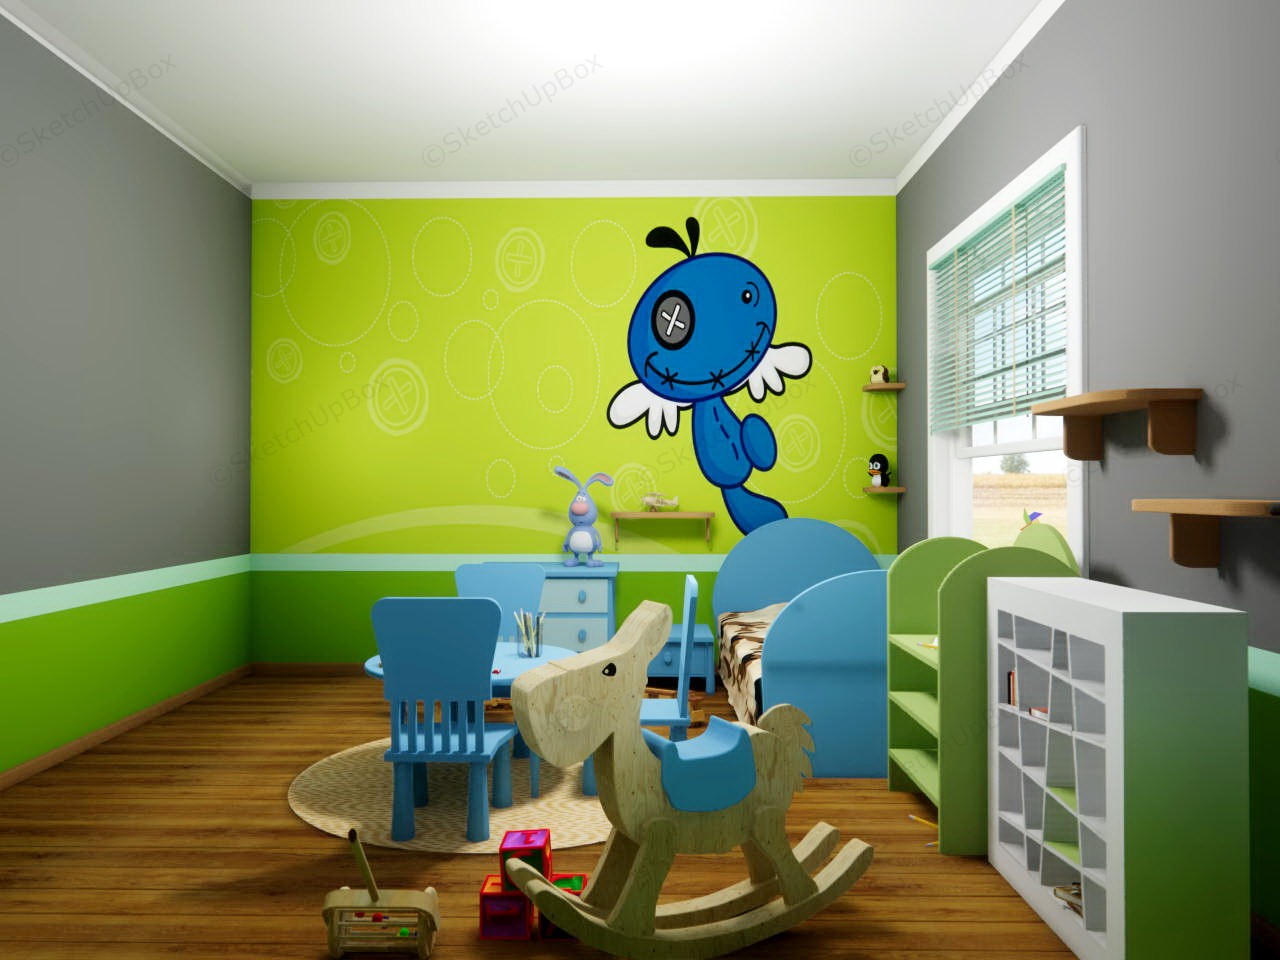 Blue And Green Boys Room Idea sketchup model preview - SketchupBox